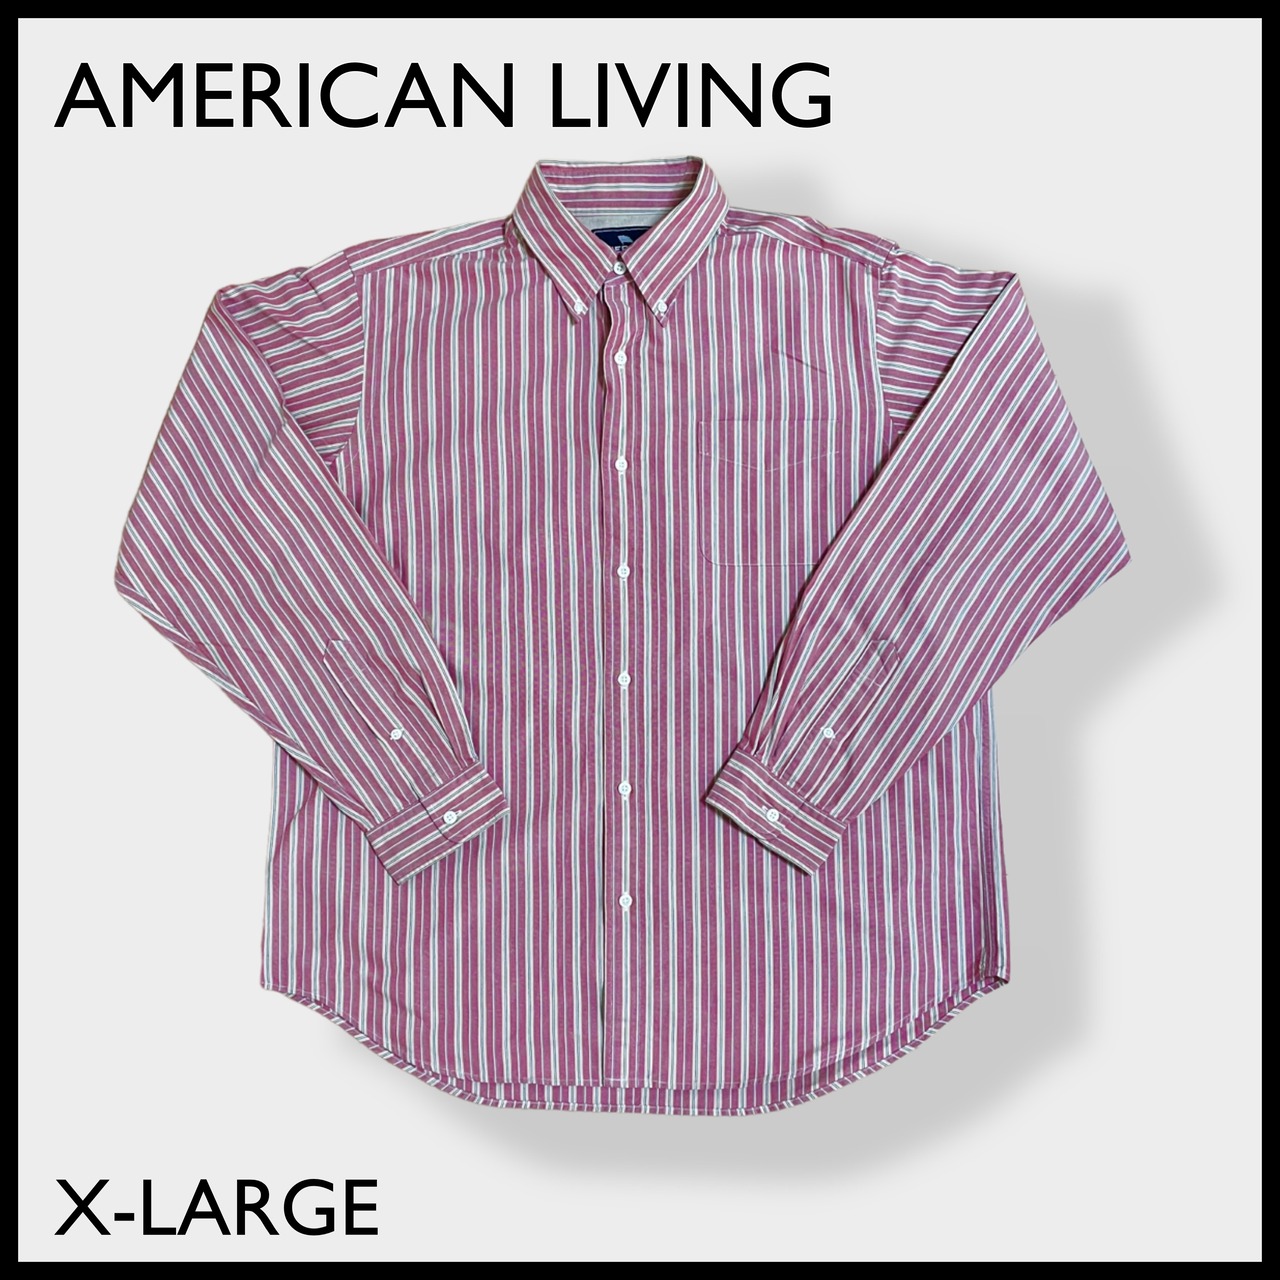 【AMERICAN LIVING】ストライプシャツ 柄物 マルチストライプ ボタンダウン コットンシャツ カジュアルシャツ 長袖 薄紫 ライラック XL ビッグサイズ US古着